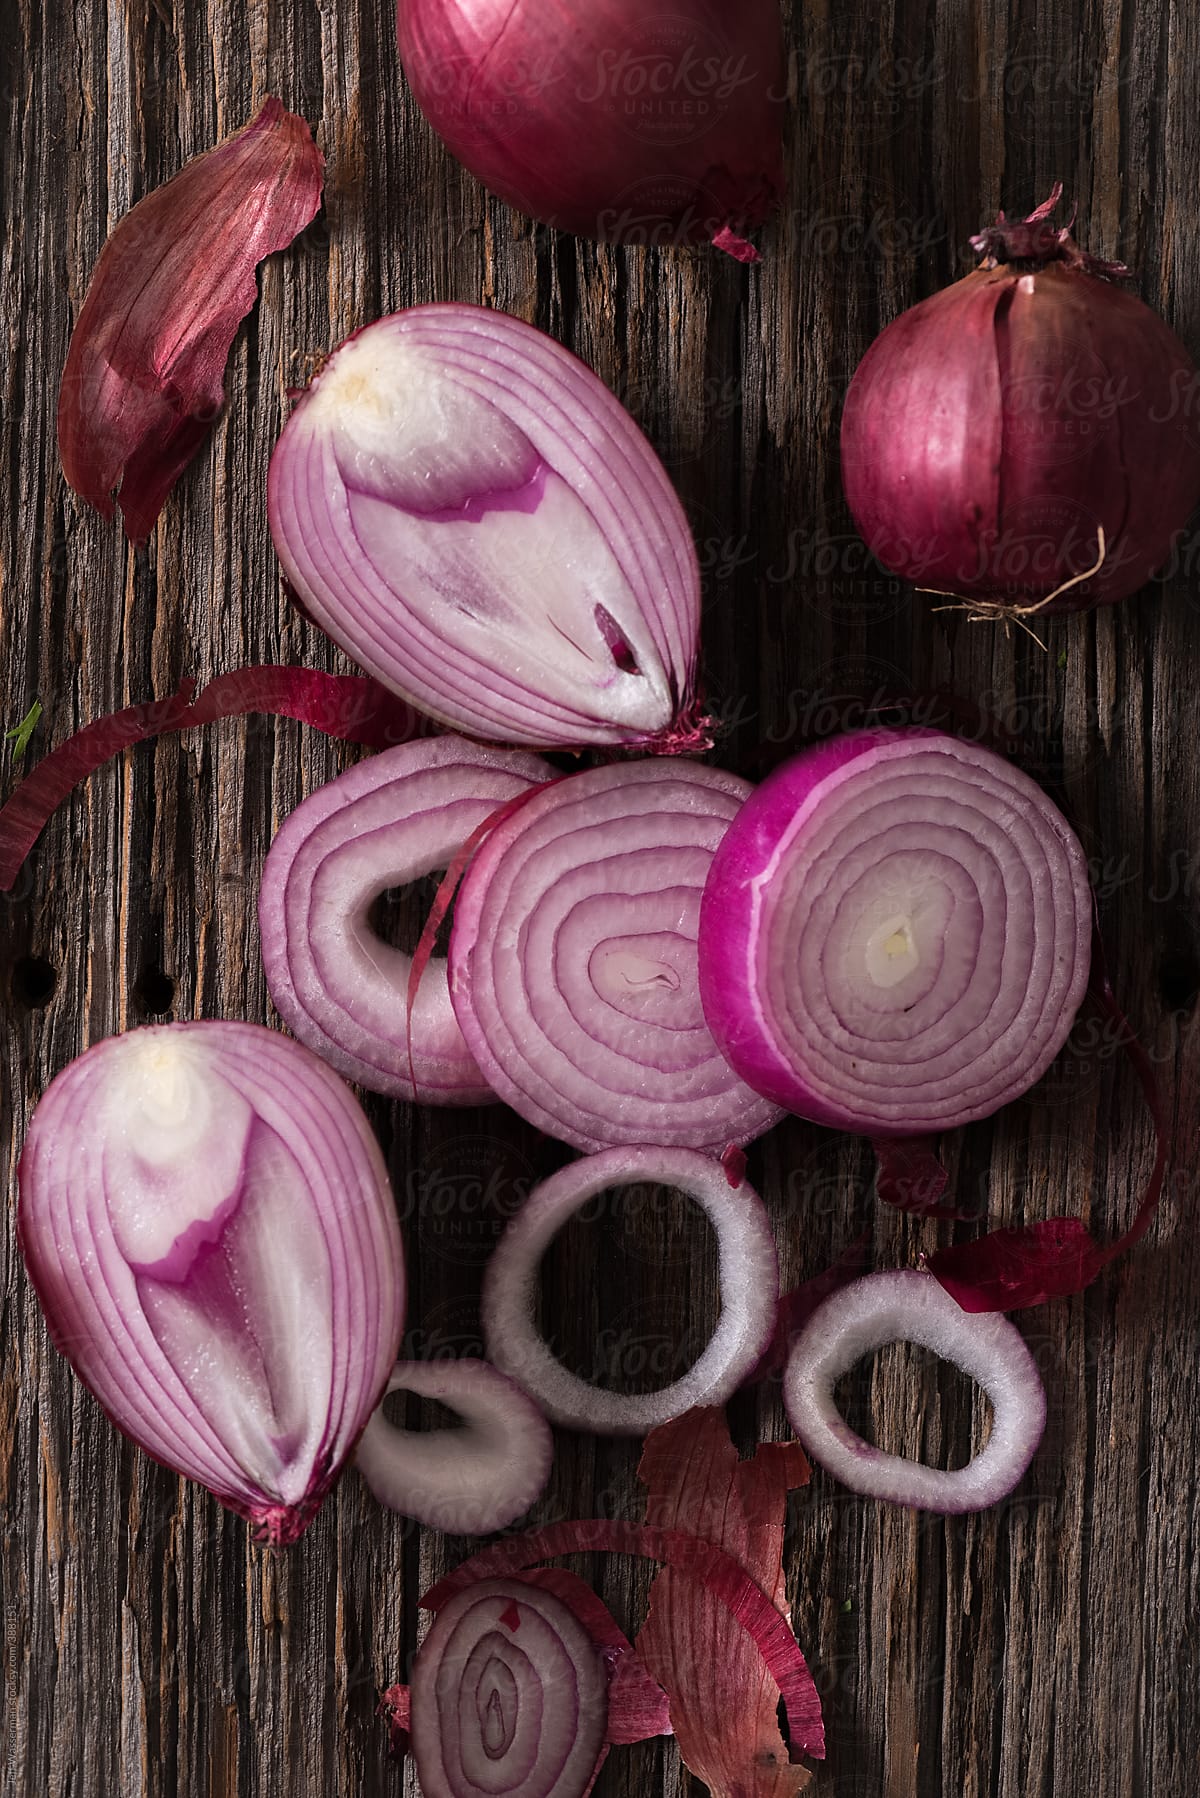 Spanish Onions Sliced